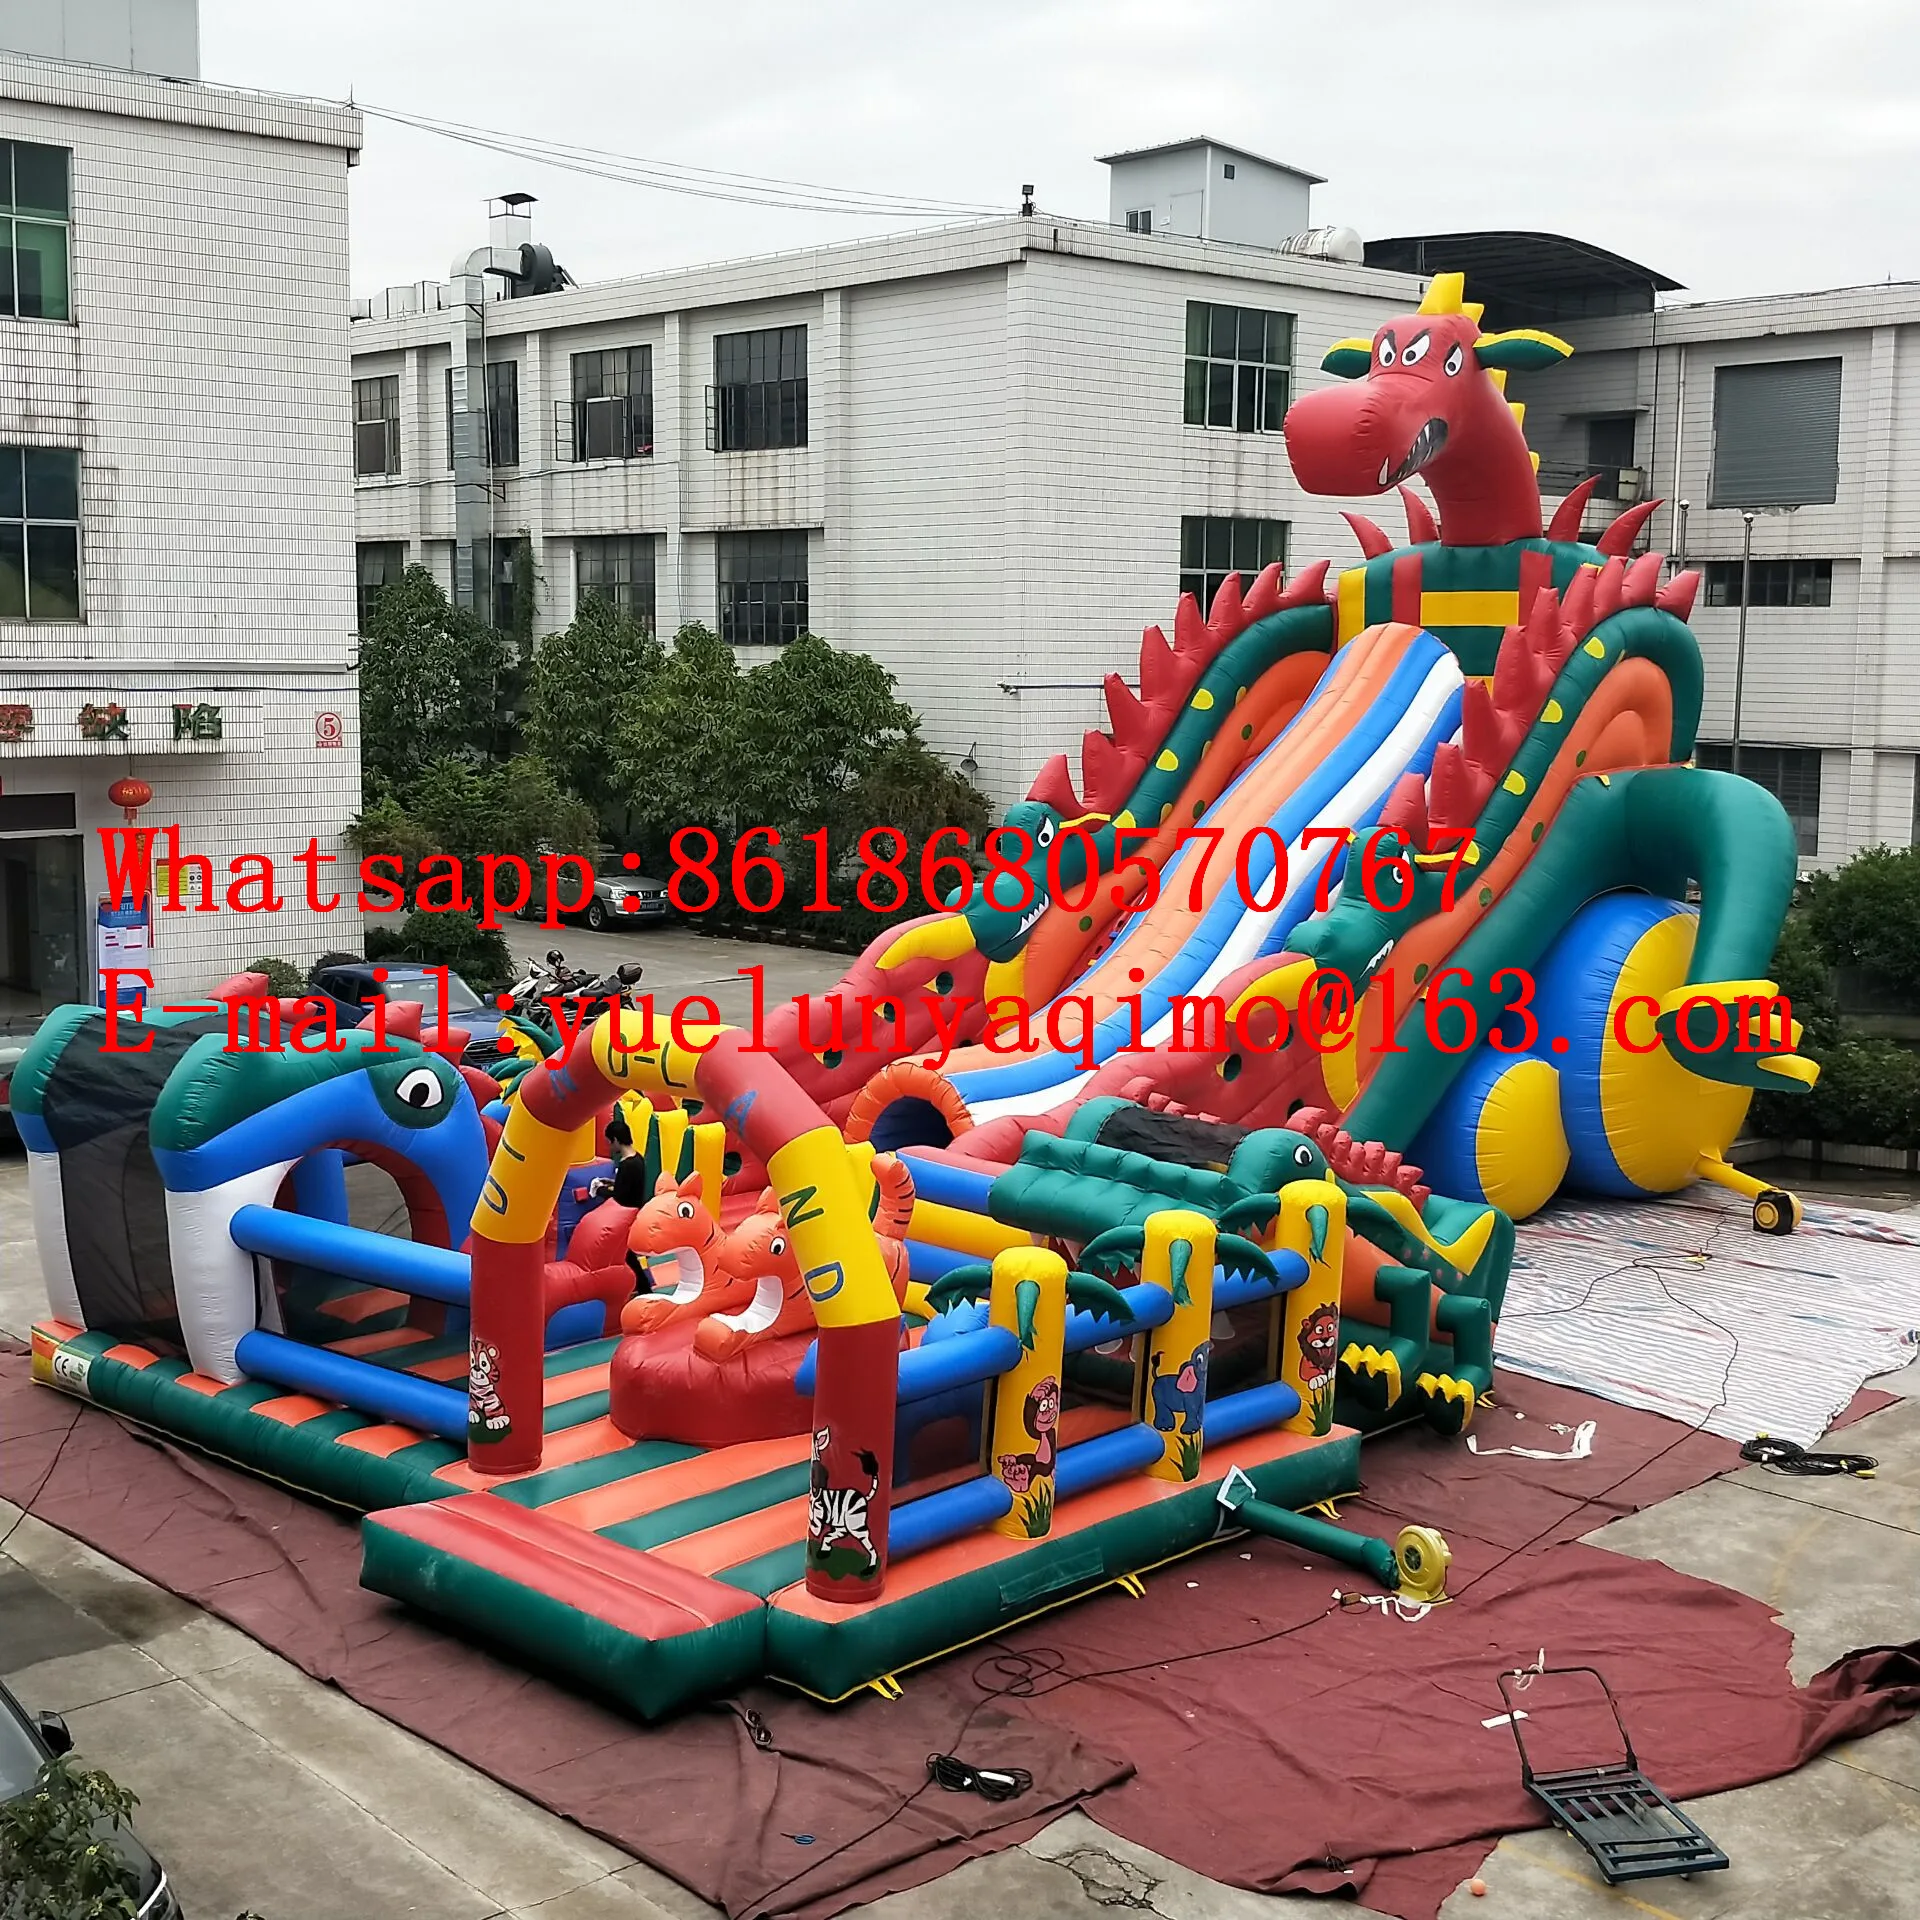 

Commercial large children's large inflatable castle trampoline slide amusement park YLY-039